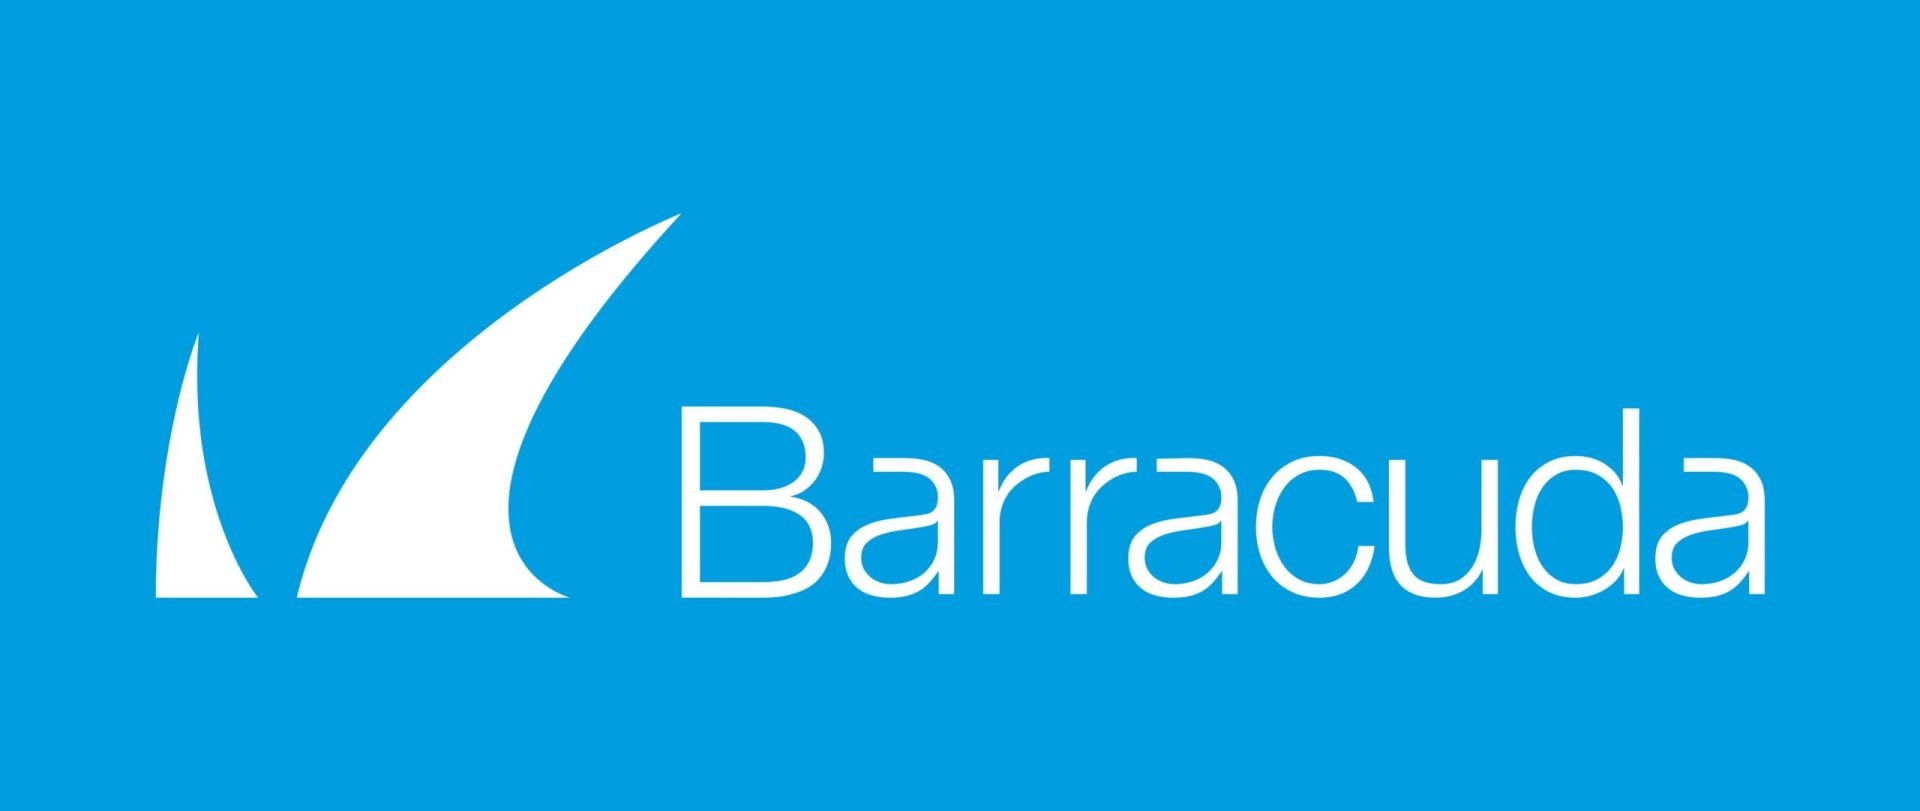 barracuda-network-1920x811.jpg